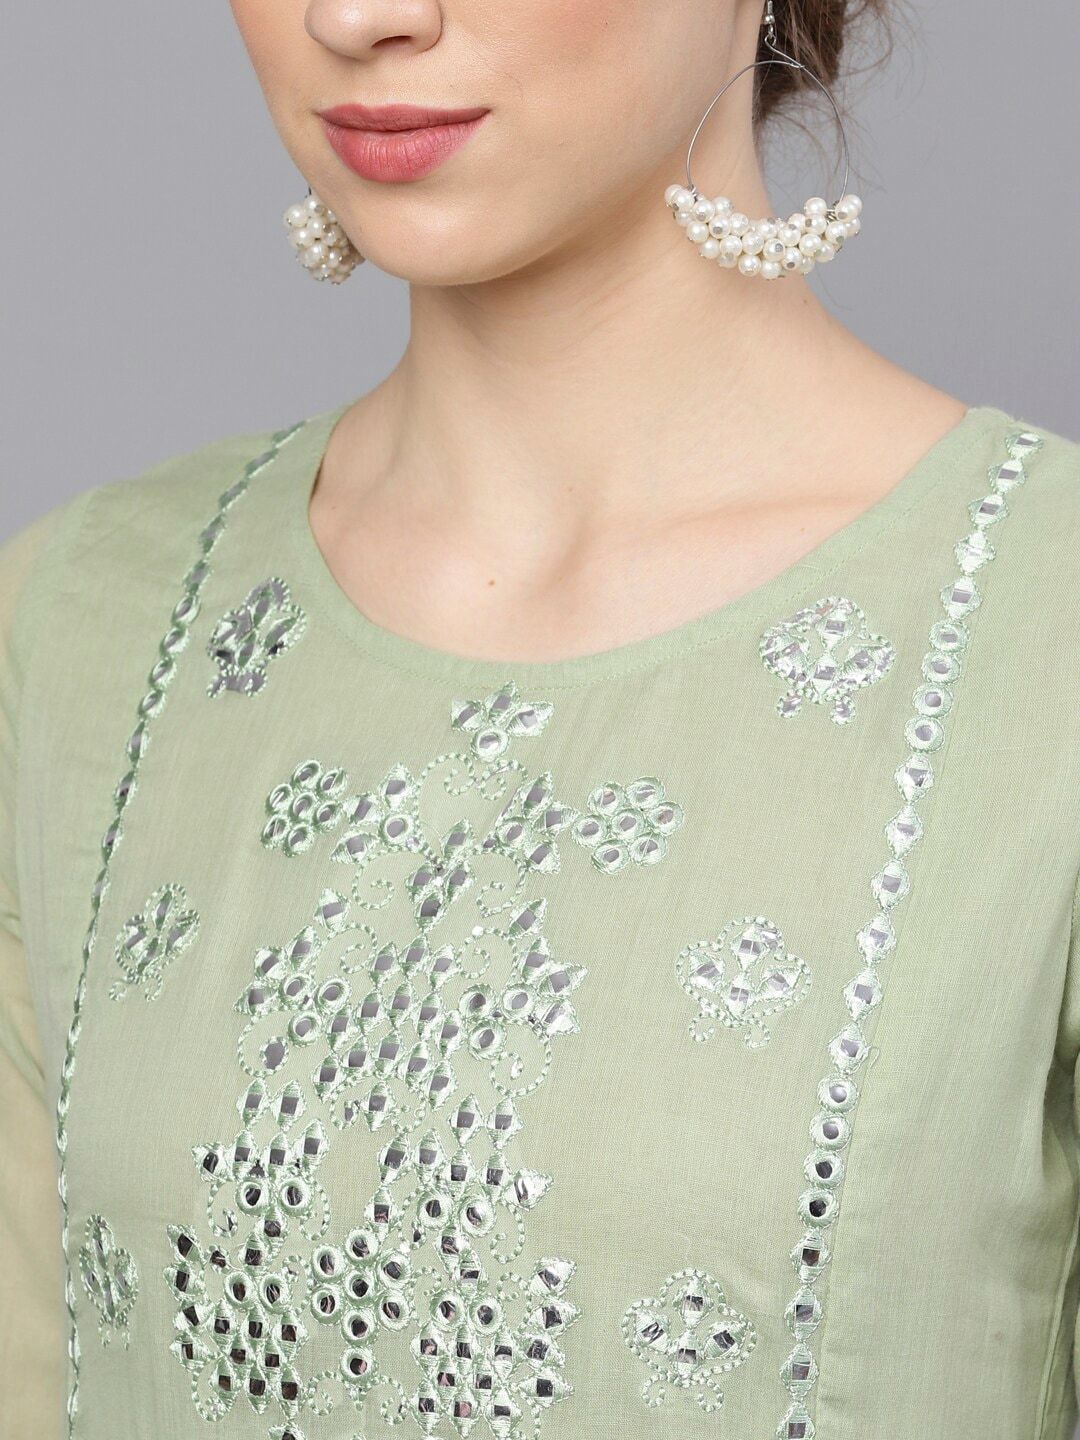 Women's  Green Embroidered Layered Anarkali Kurta - AKS